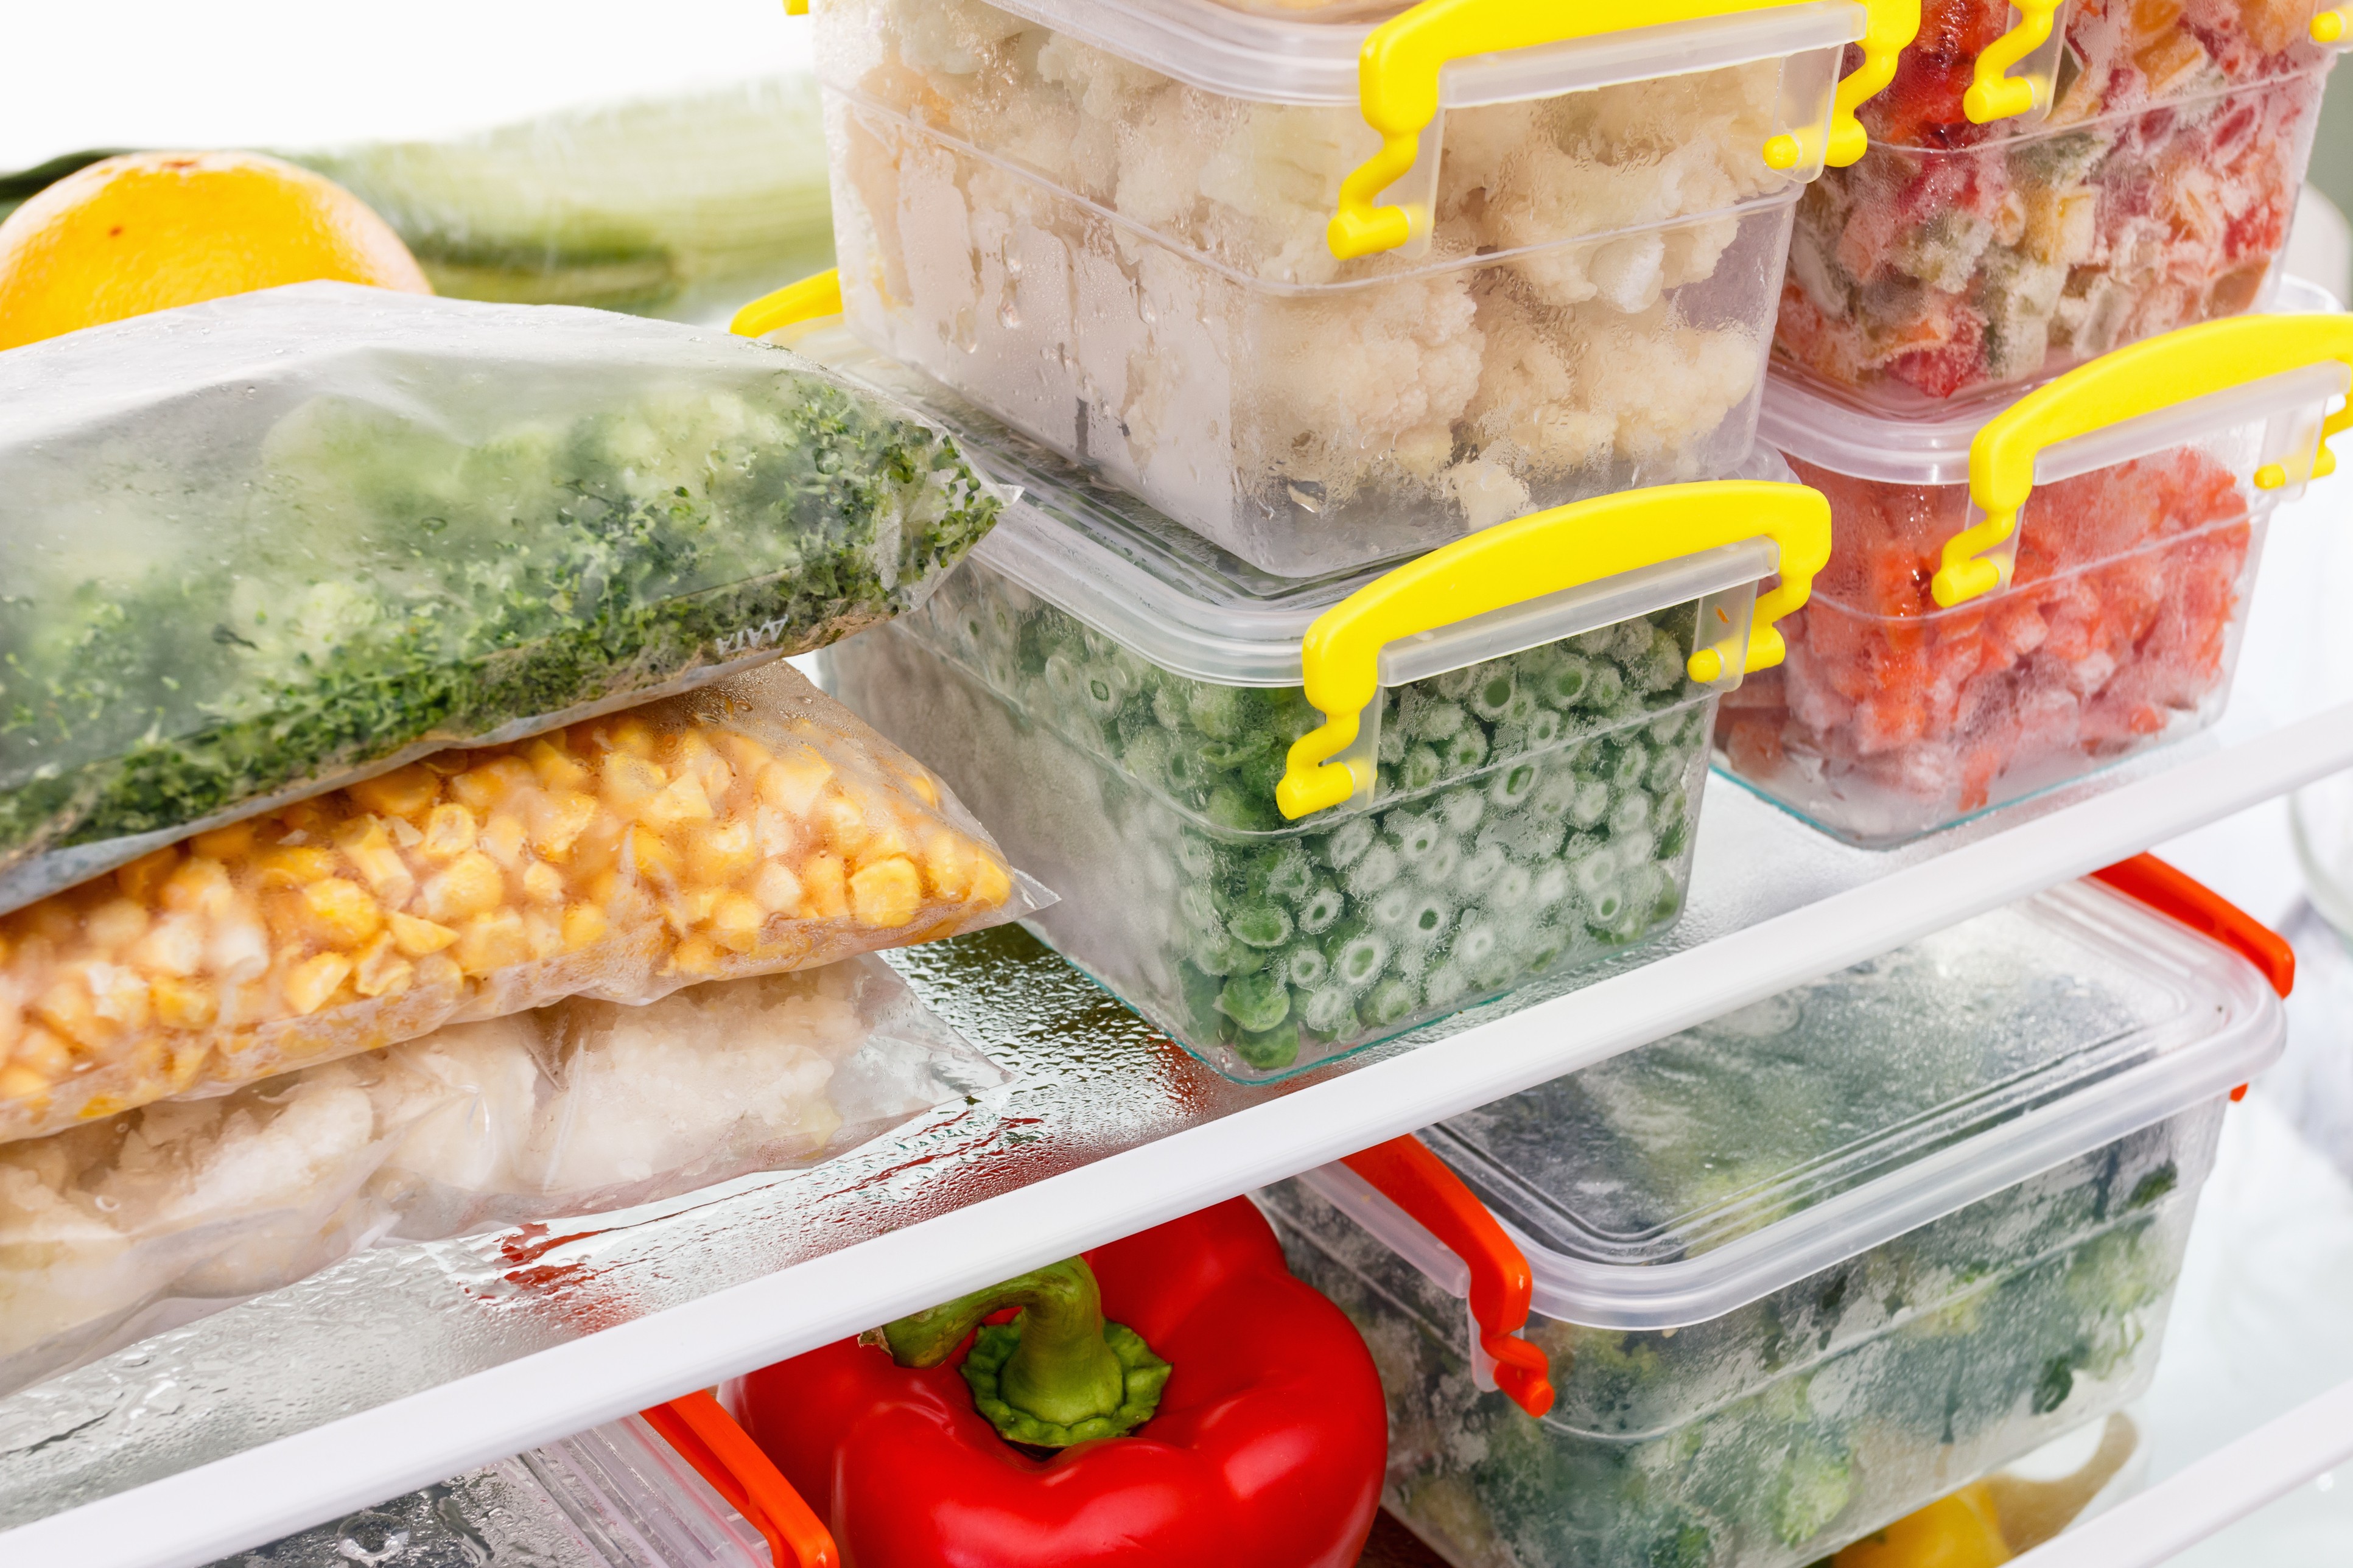 Congelar alimentos ajuda a evitar desperdício (Foto: Thinkstock)